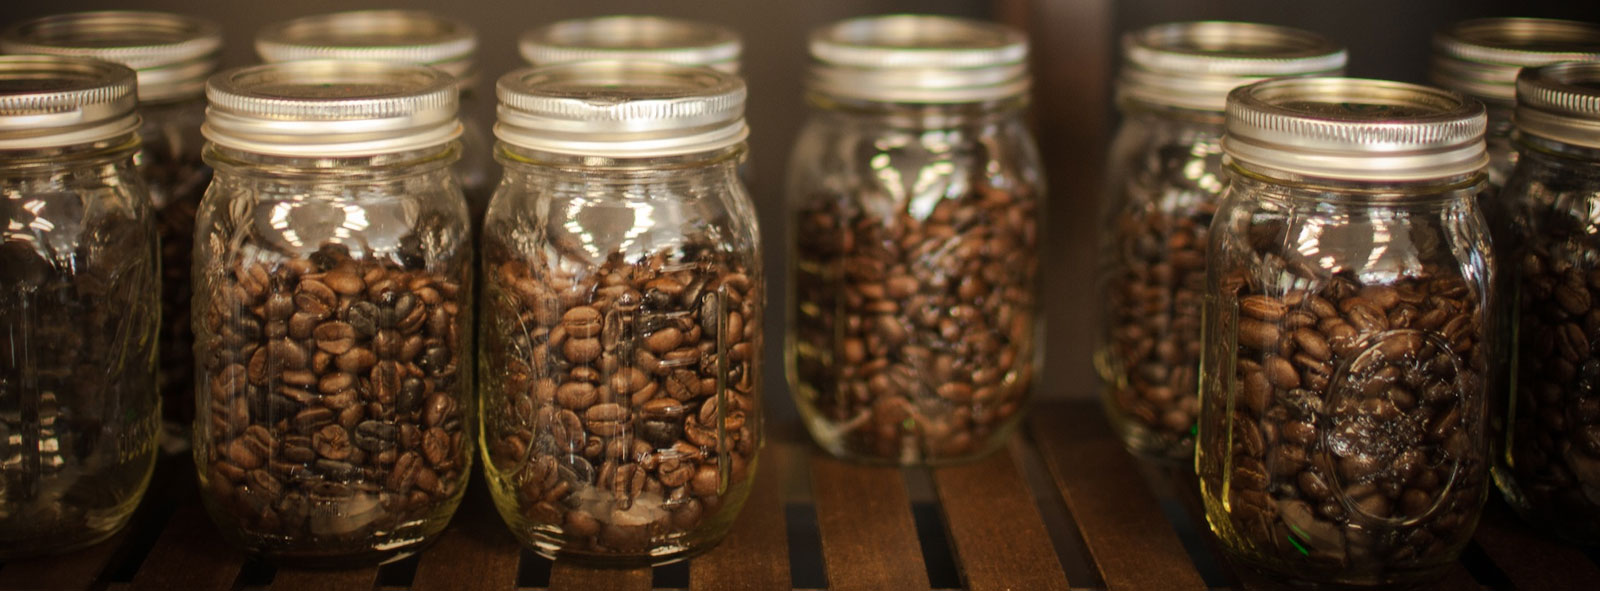 Tank Coffee - Coffee Jars